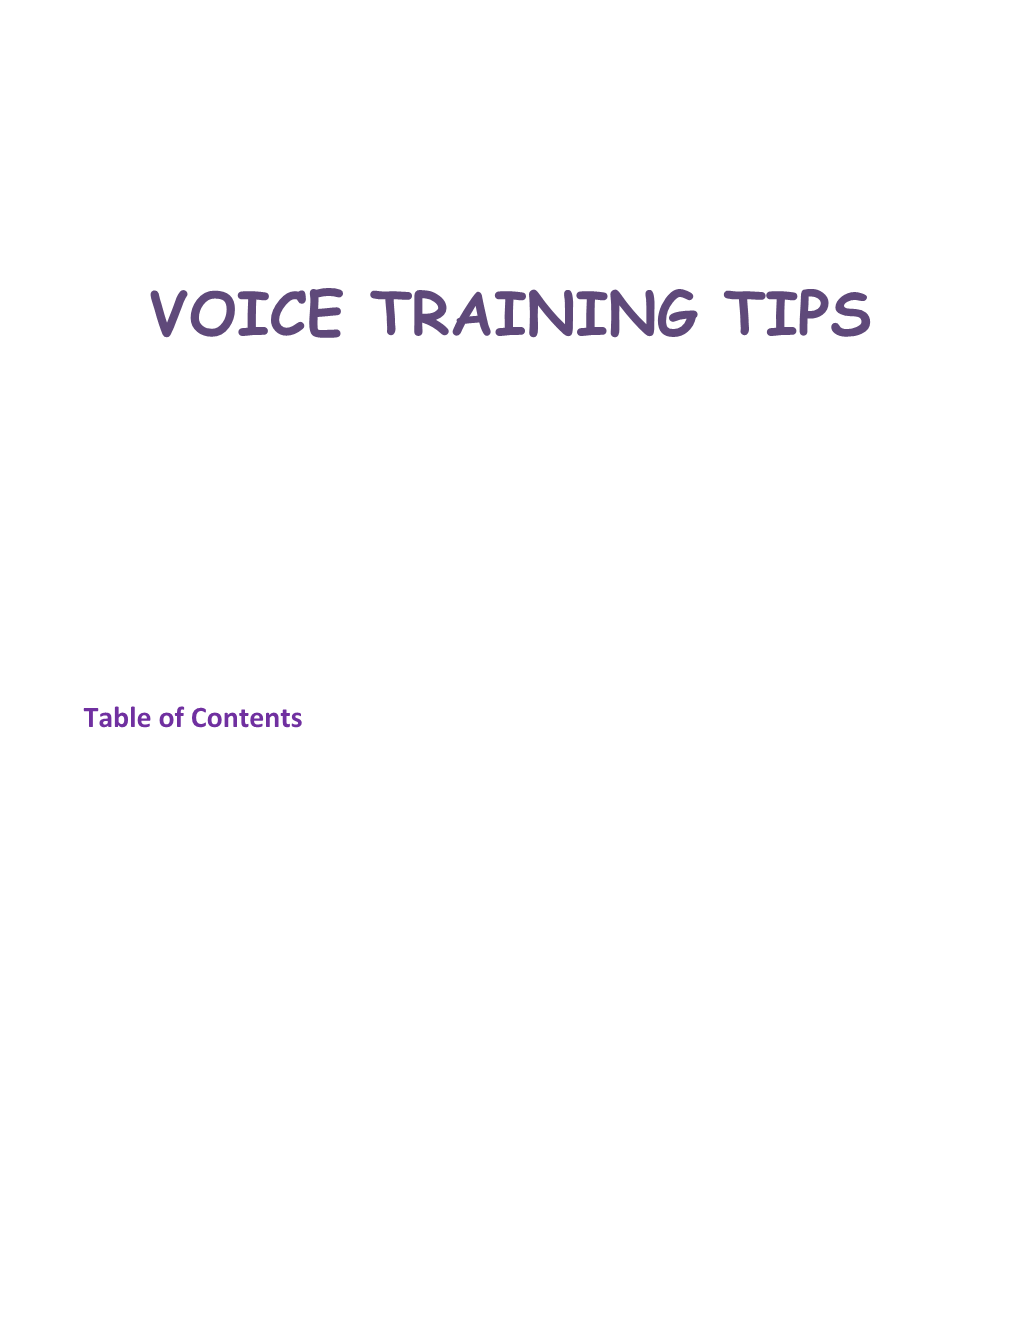 Voice Training Tips